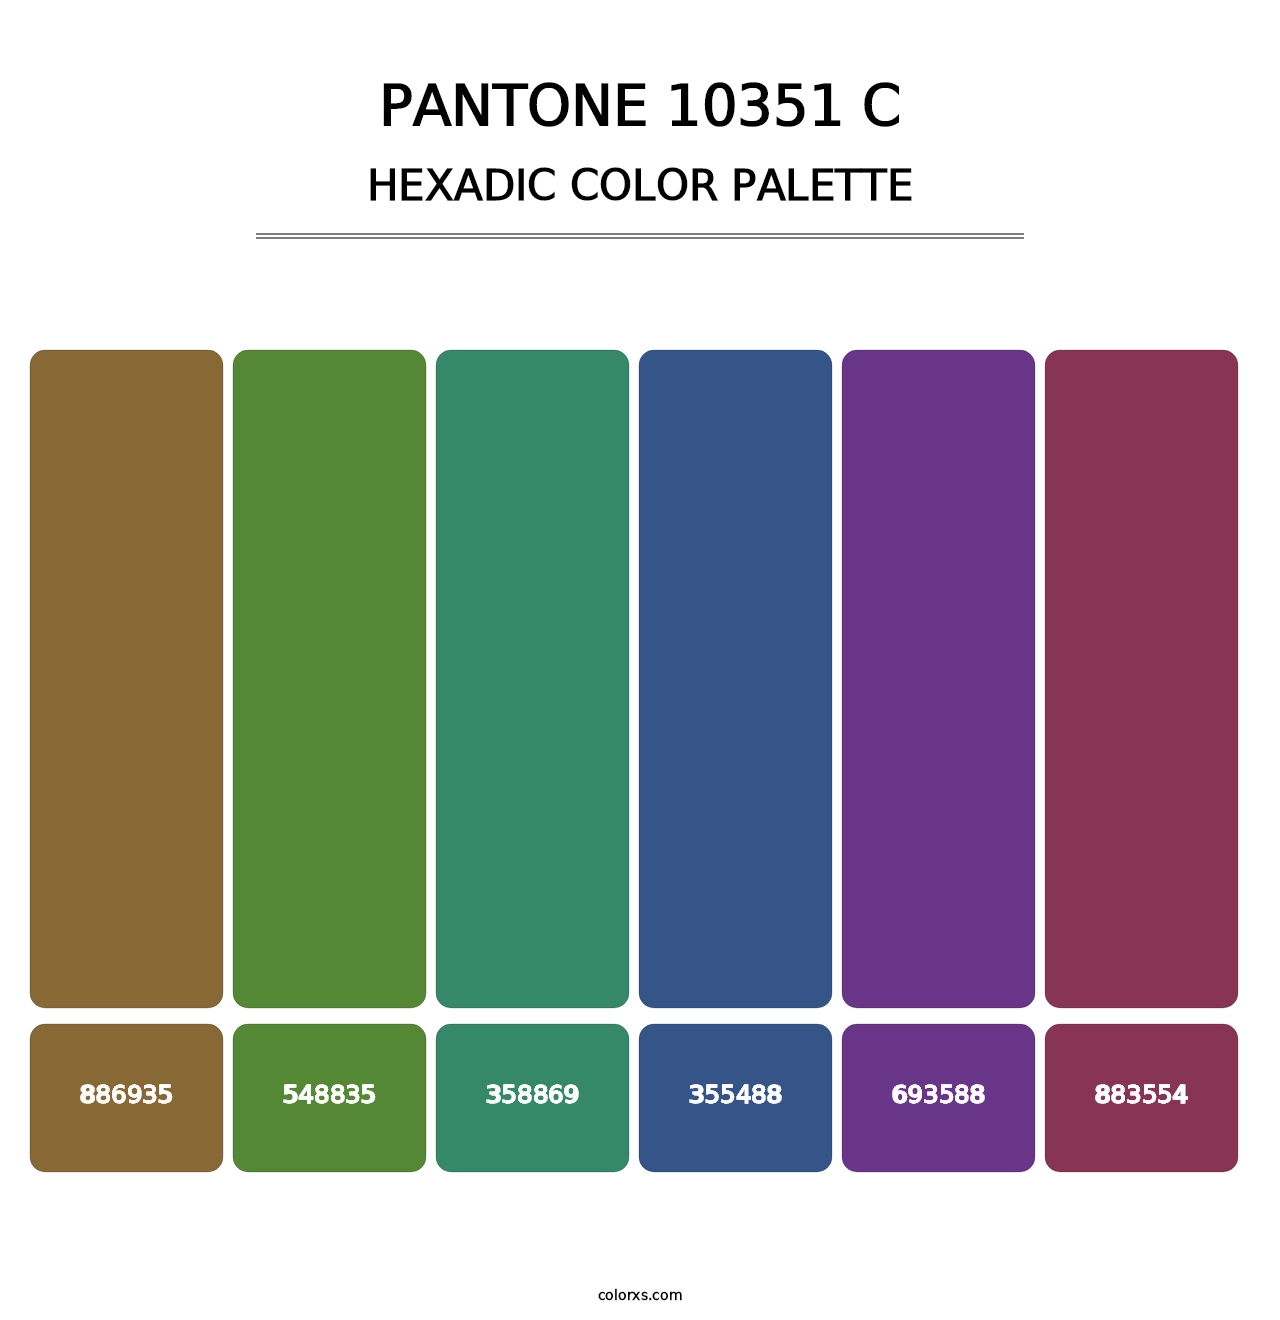 PANTONE 10351 C - Hexadic Color Palette